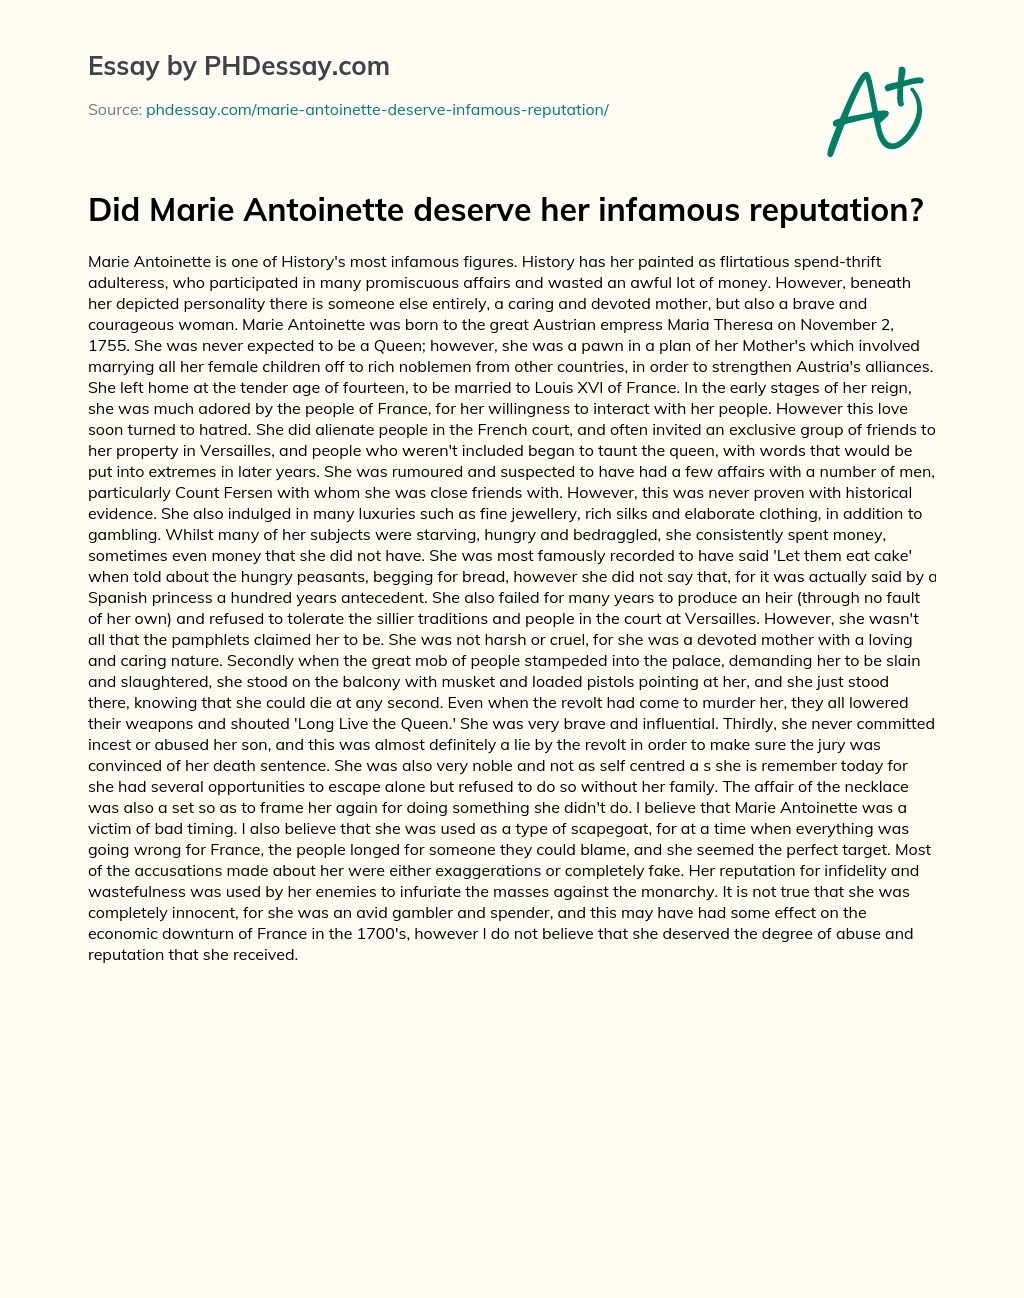 Did Marie Antoinette deserve her infamous reputation? essay